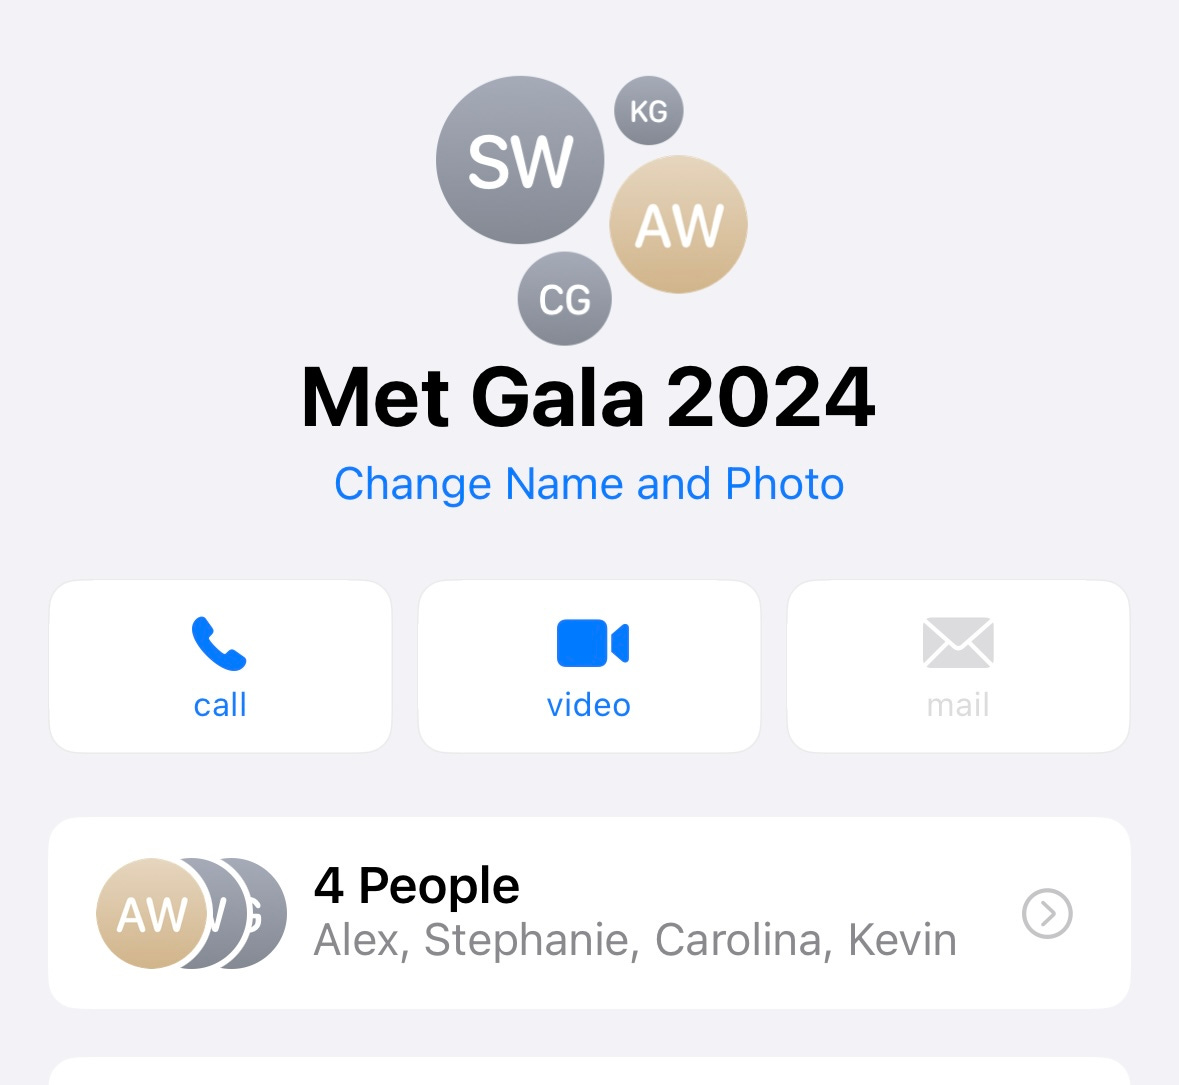 Met Gala 2024 group chat screenshot